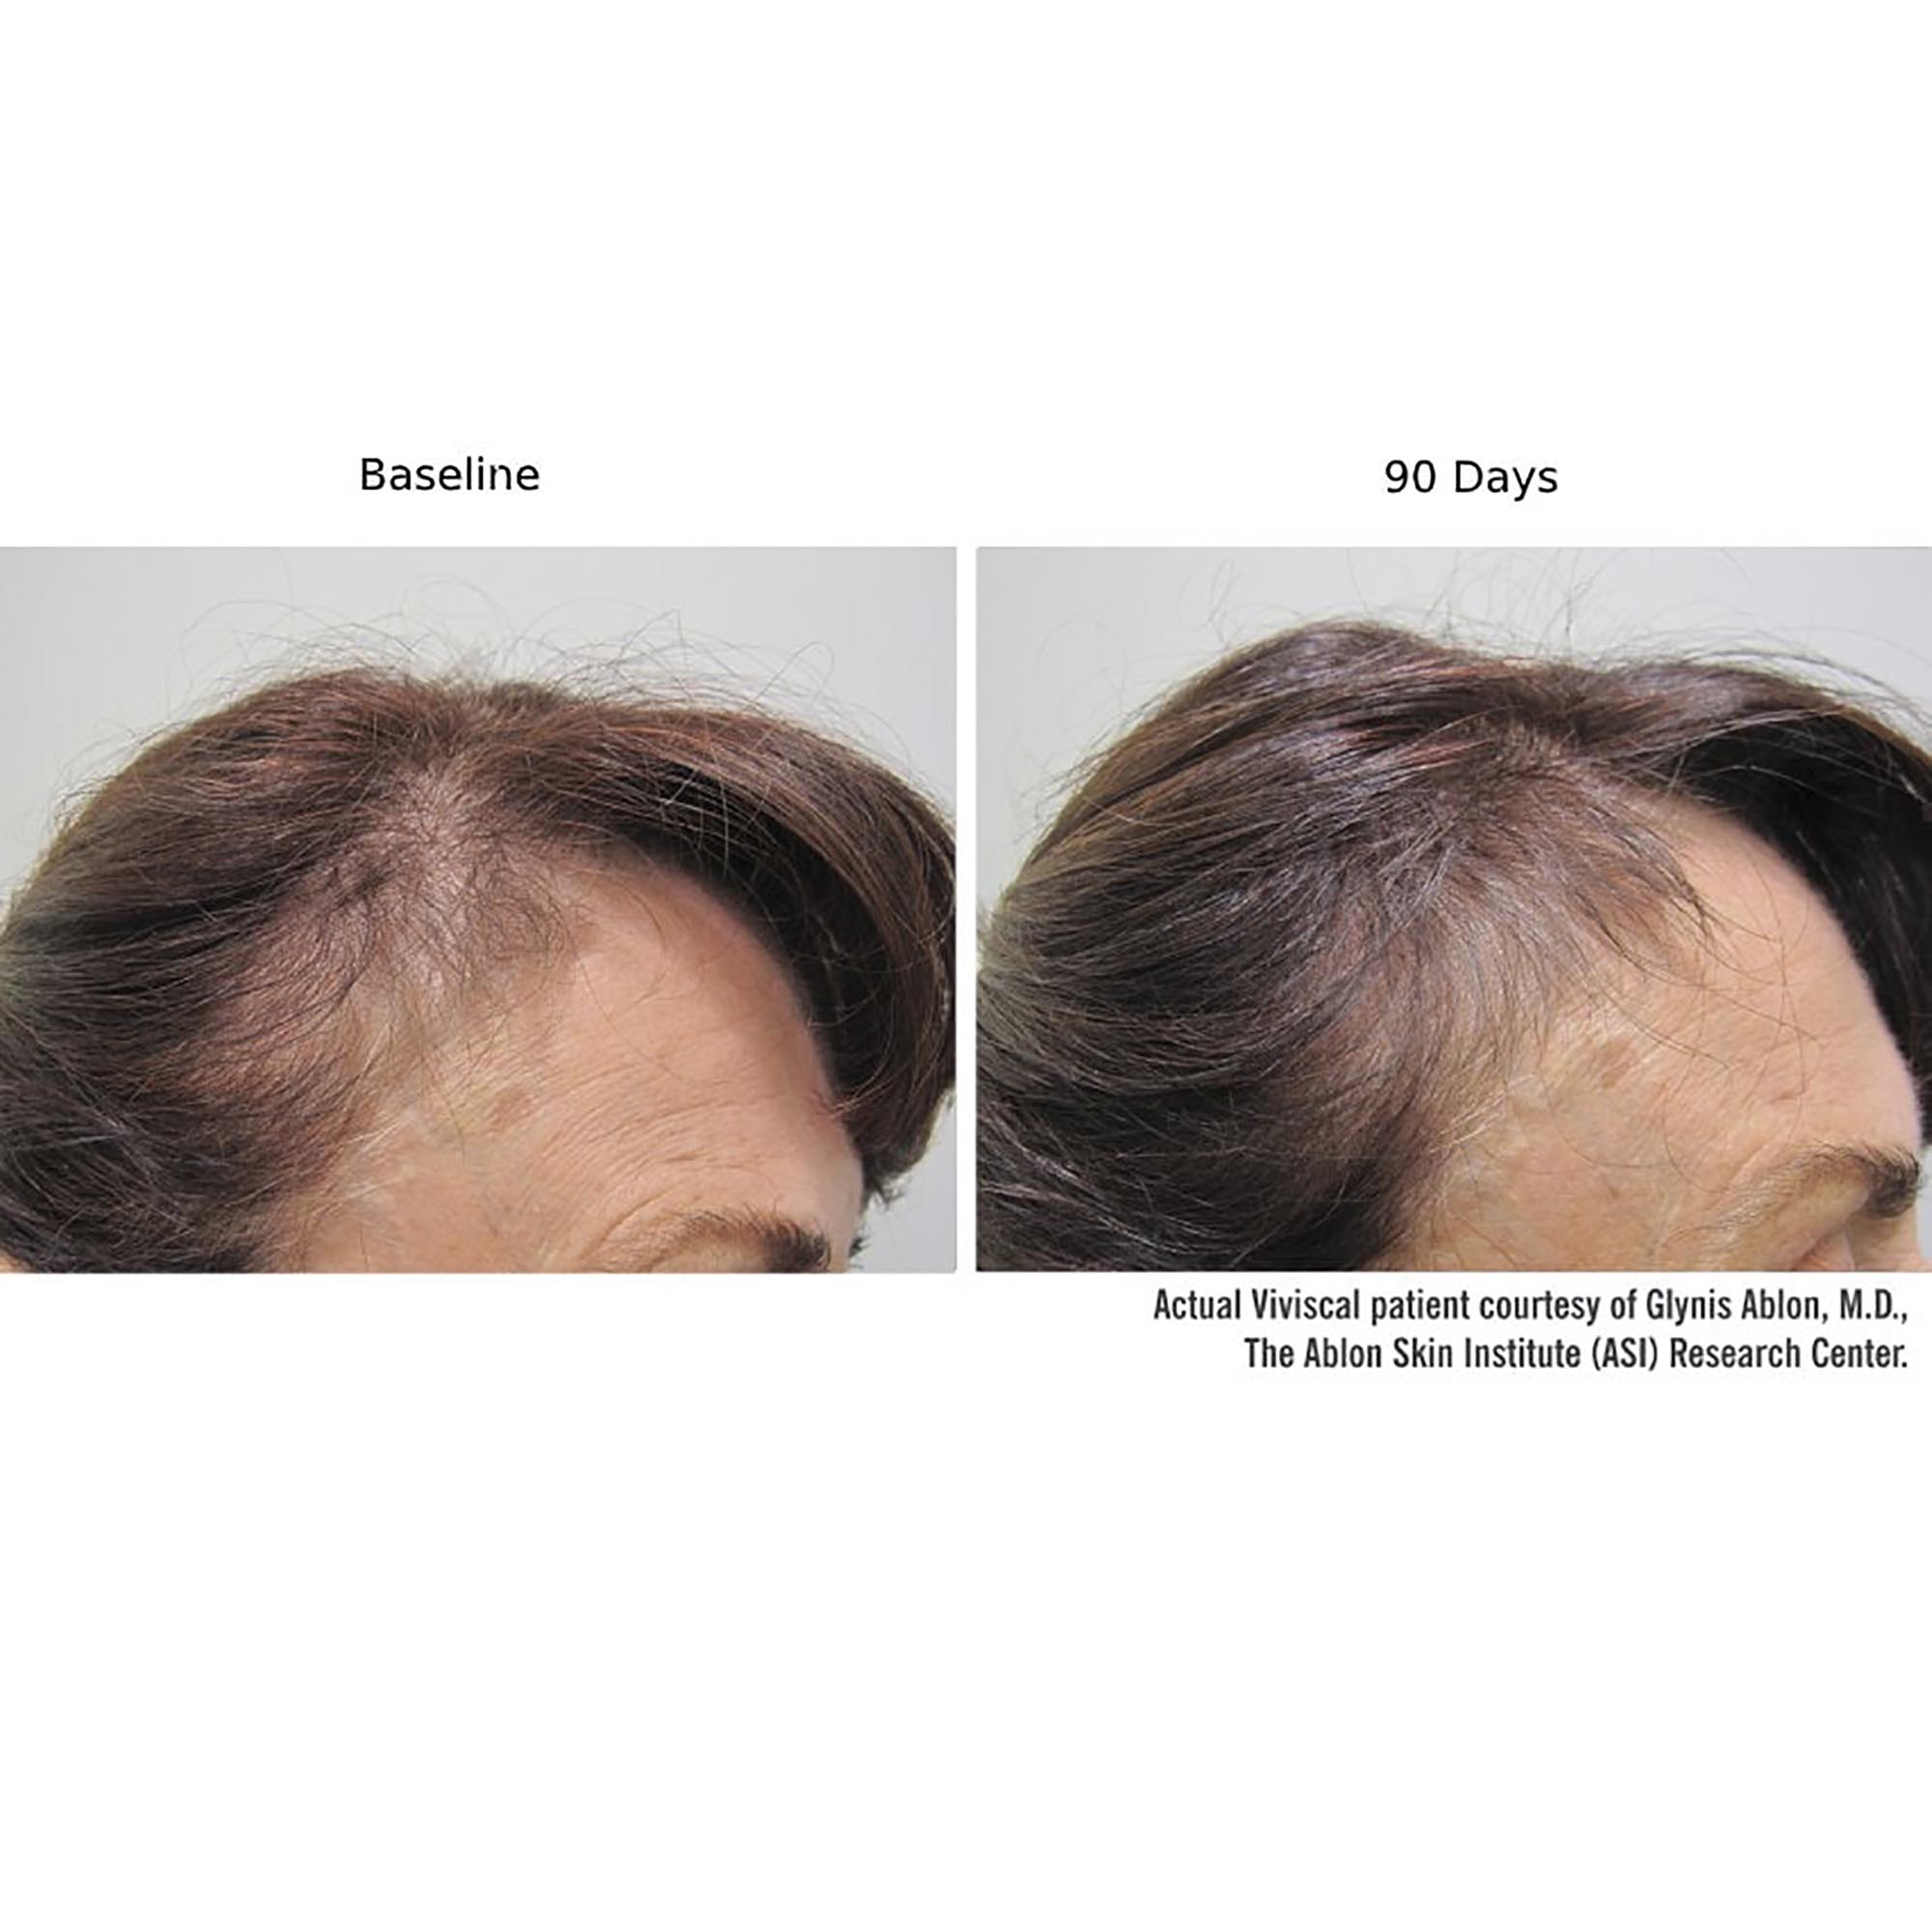 Viviscal Professional Advanced Hair Health Supplements / 60CT